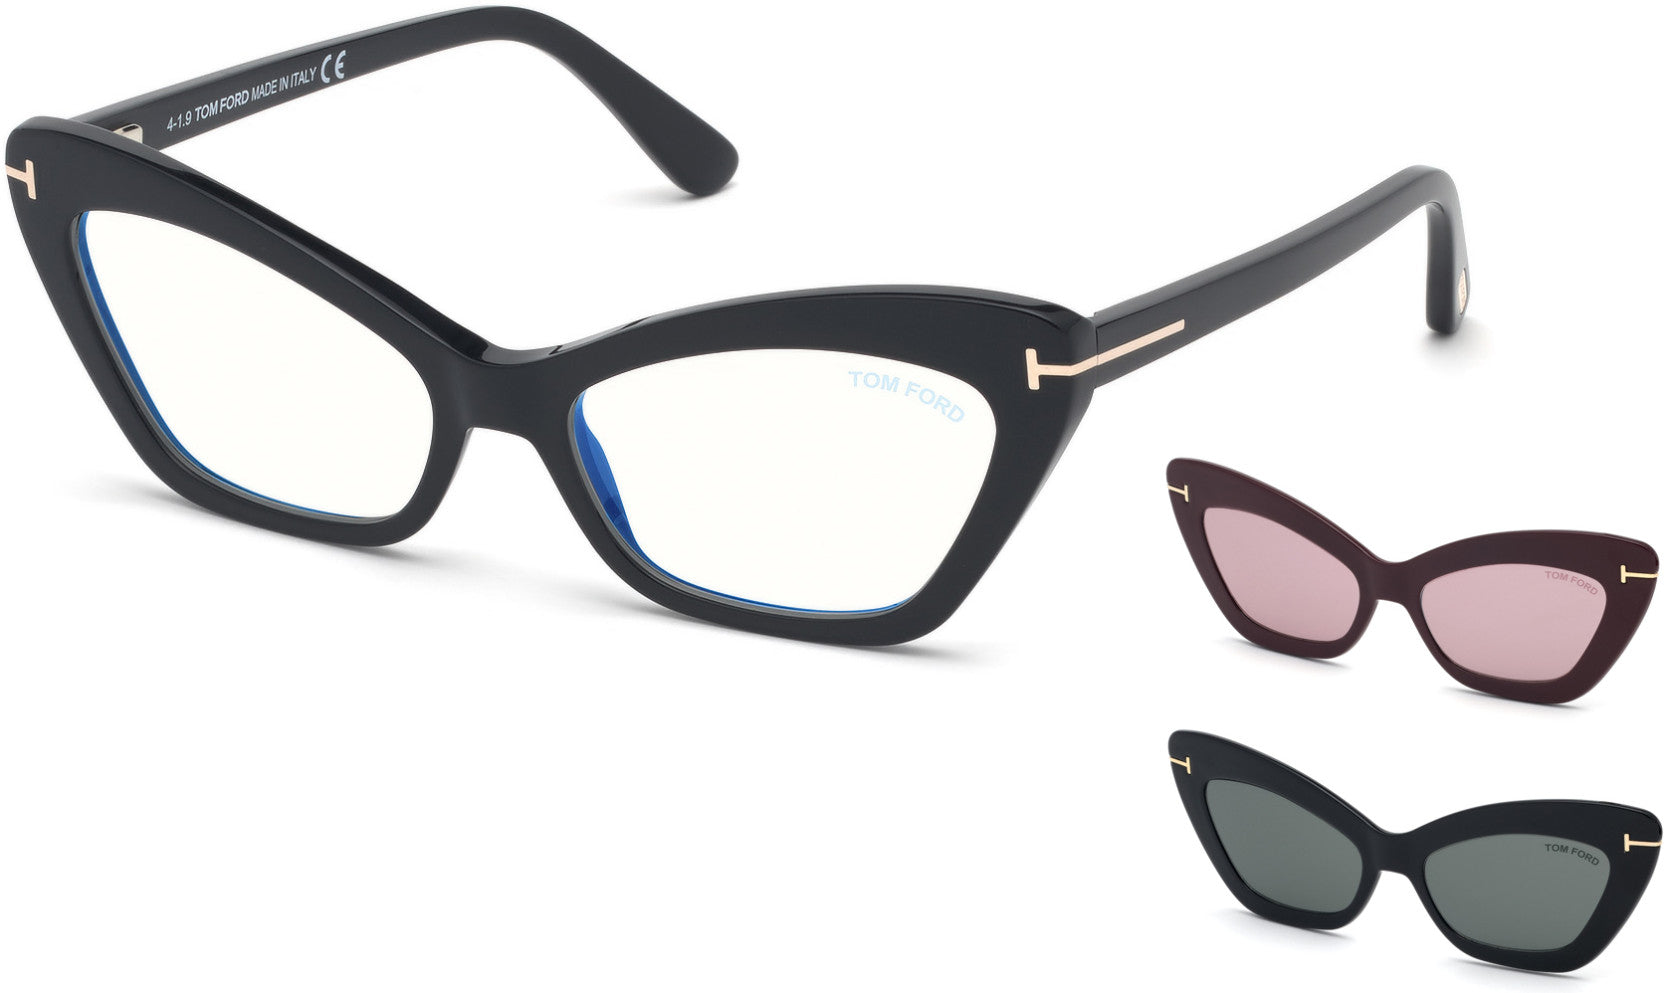 Tom Ford FT5643-B Cat Eyeglasses 001-001 - Black, Blue Block/ Clips: Black & Smoke Green, Burgundy & Silver Flash